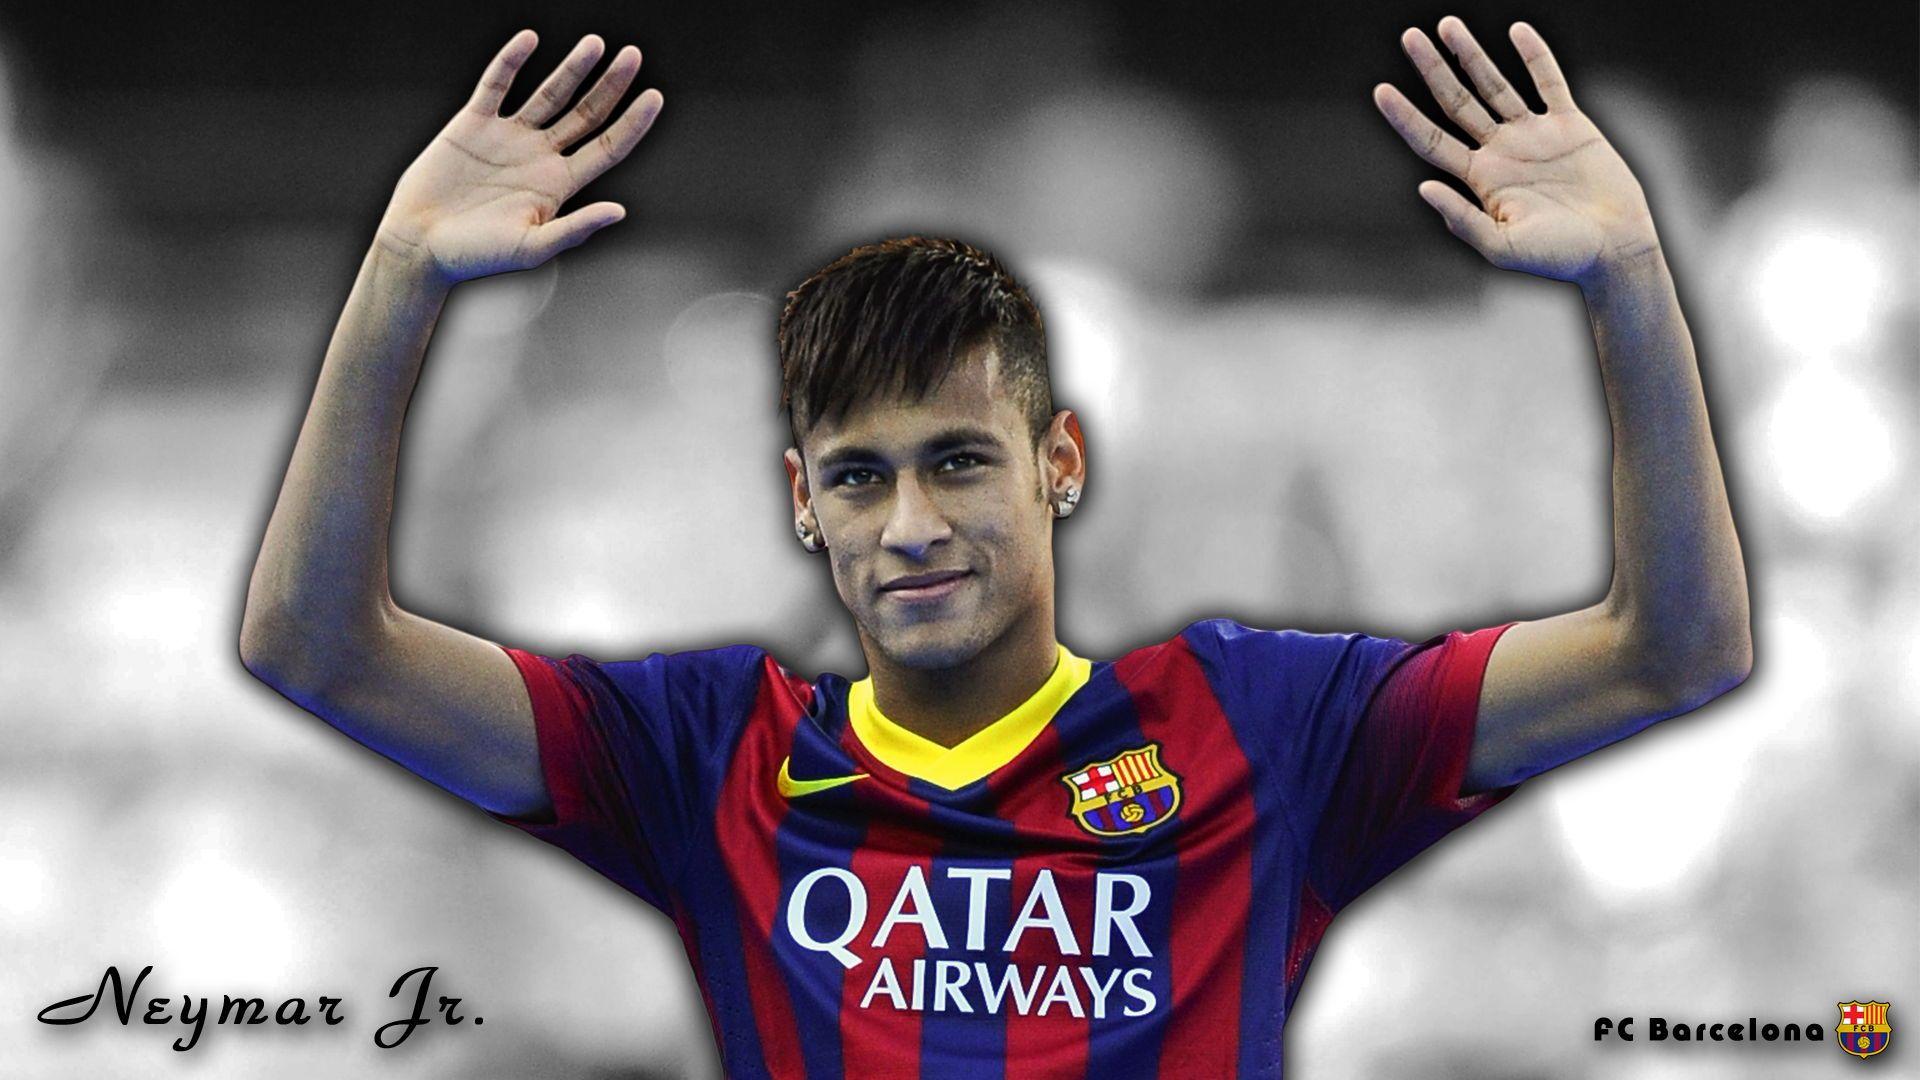 Barcelona Neymar Football Player Wallpaper: Players